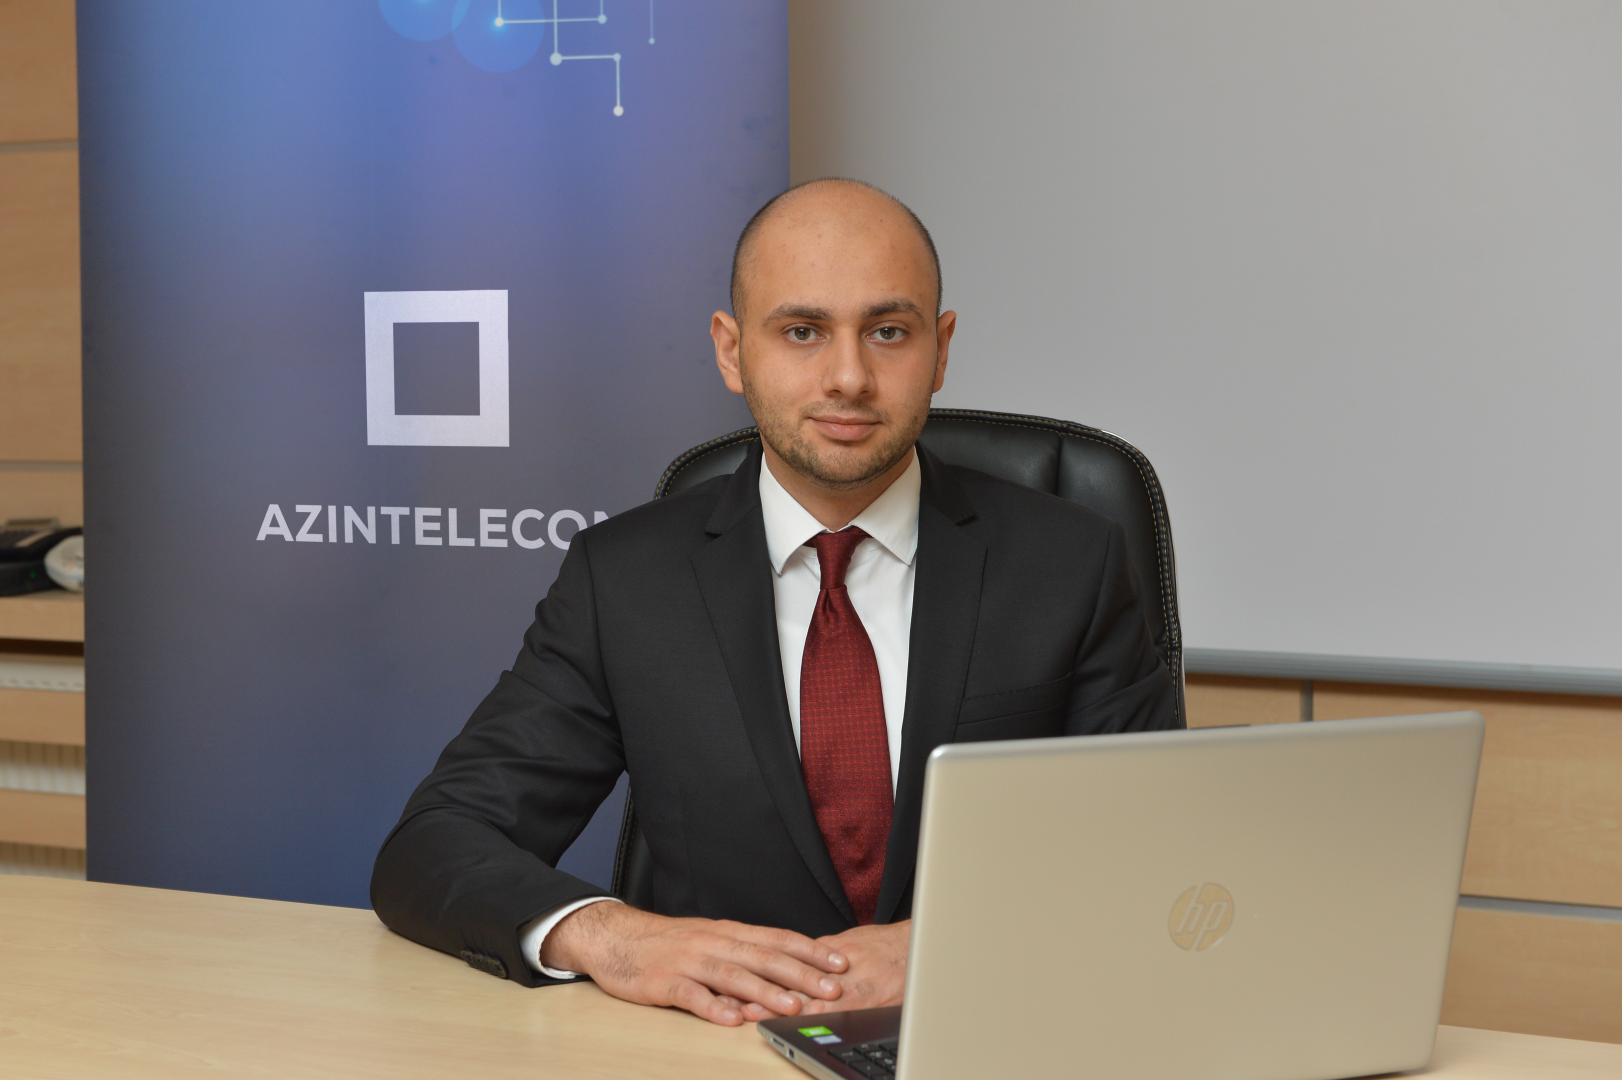 New chairman of board appointed in Azerbaijan’s AzInTelecom company